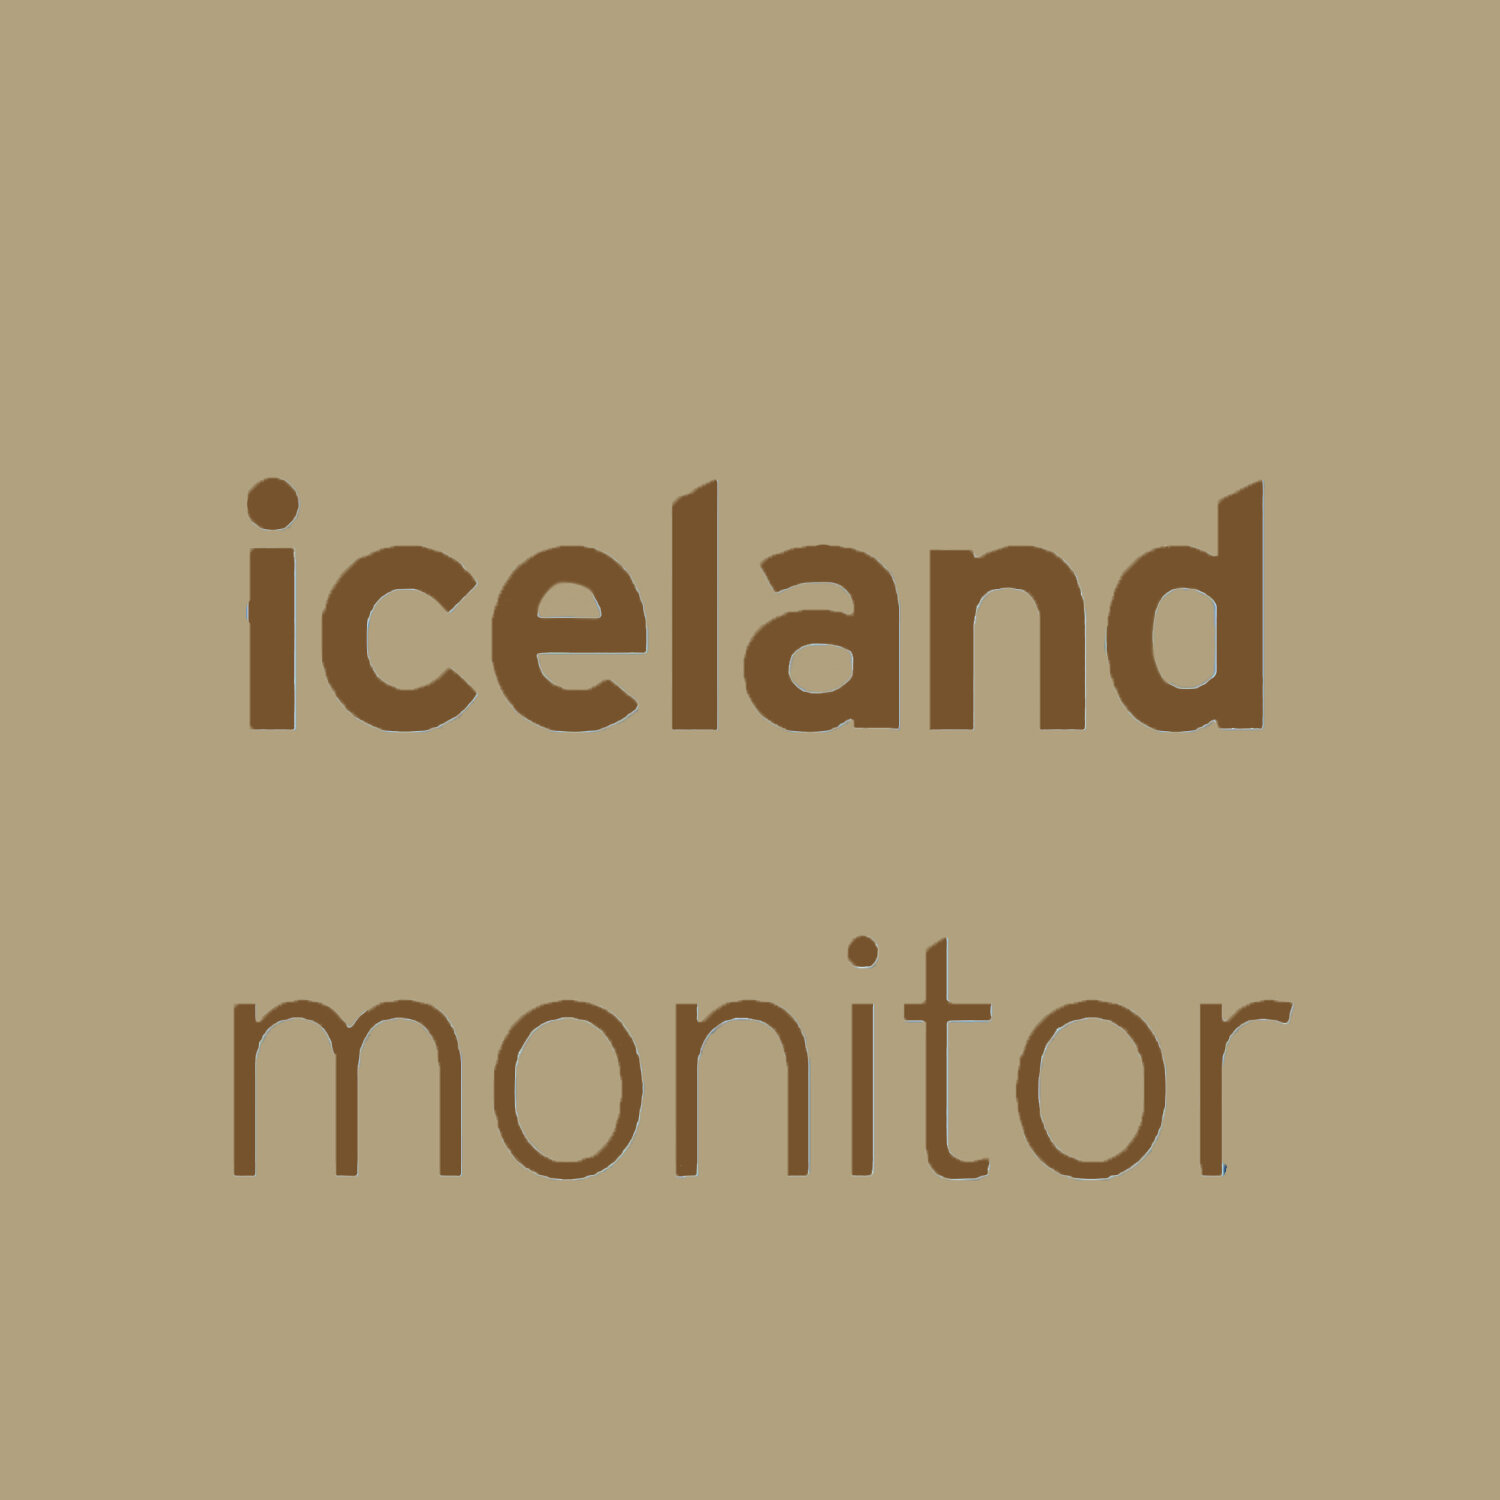 Iceland Monitor features "Jörmundur"